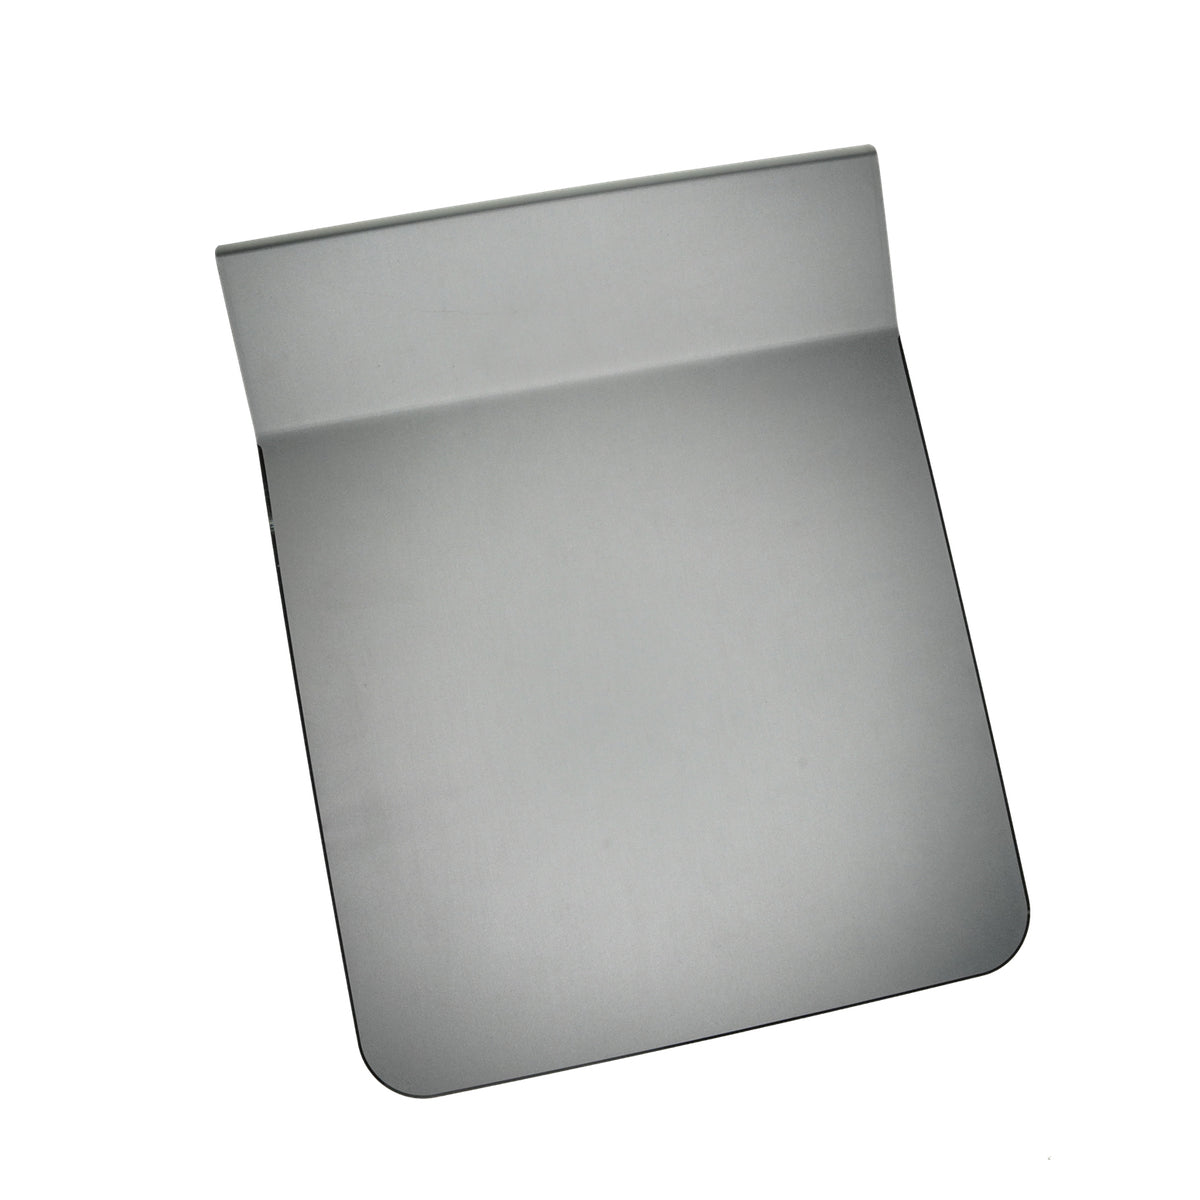 Accesorios APPLE mousem pad hub aluminio GRIS OSCURO